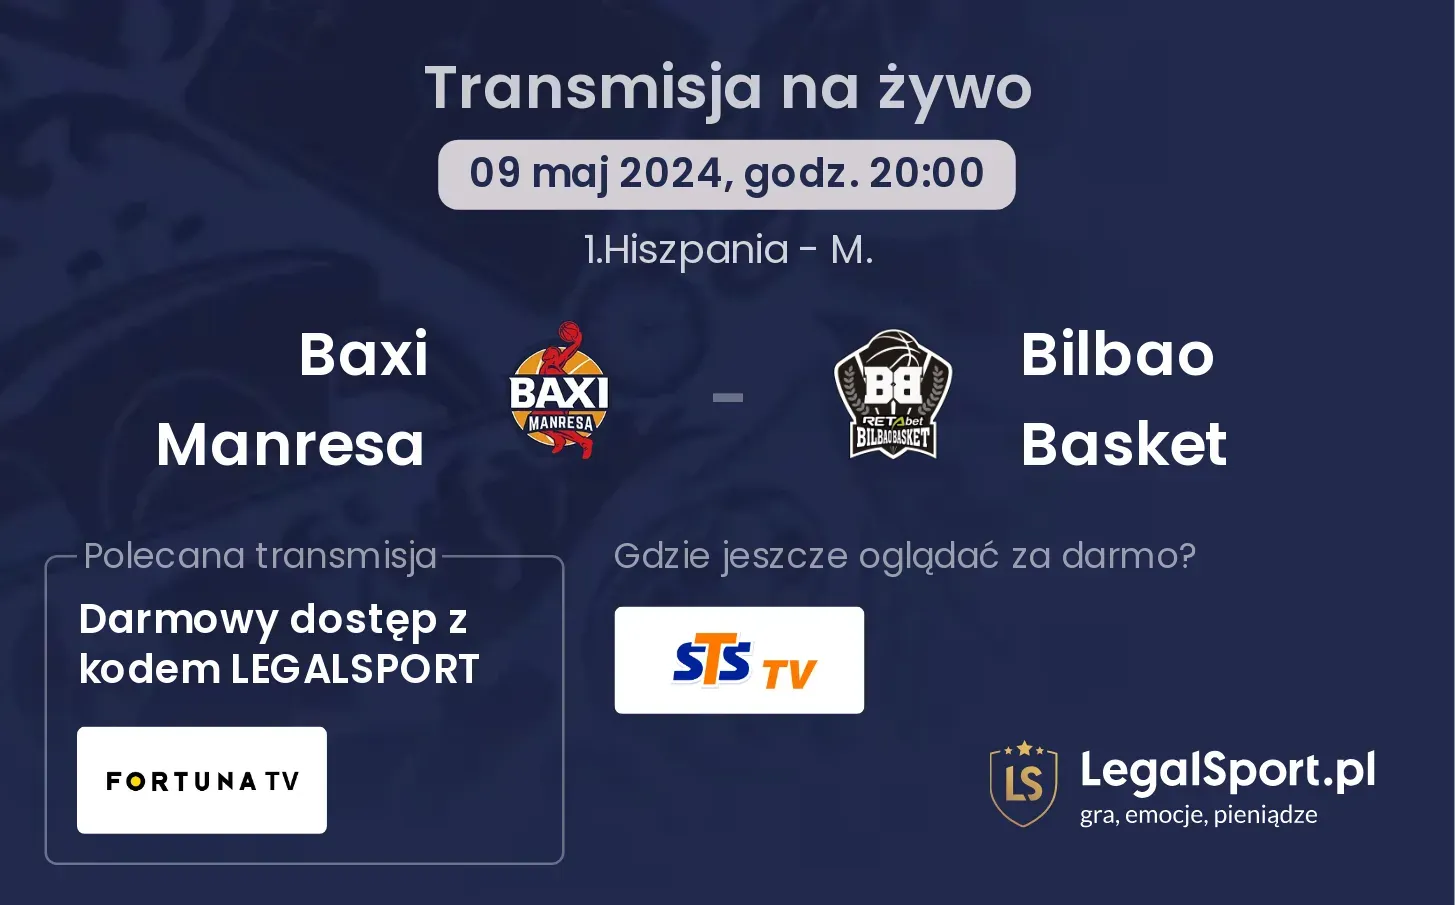 Baxi Manresa - Bilbao Basket transmisja na żywo